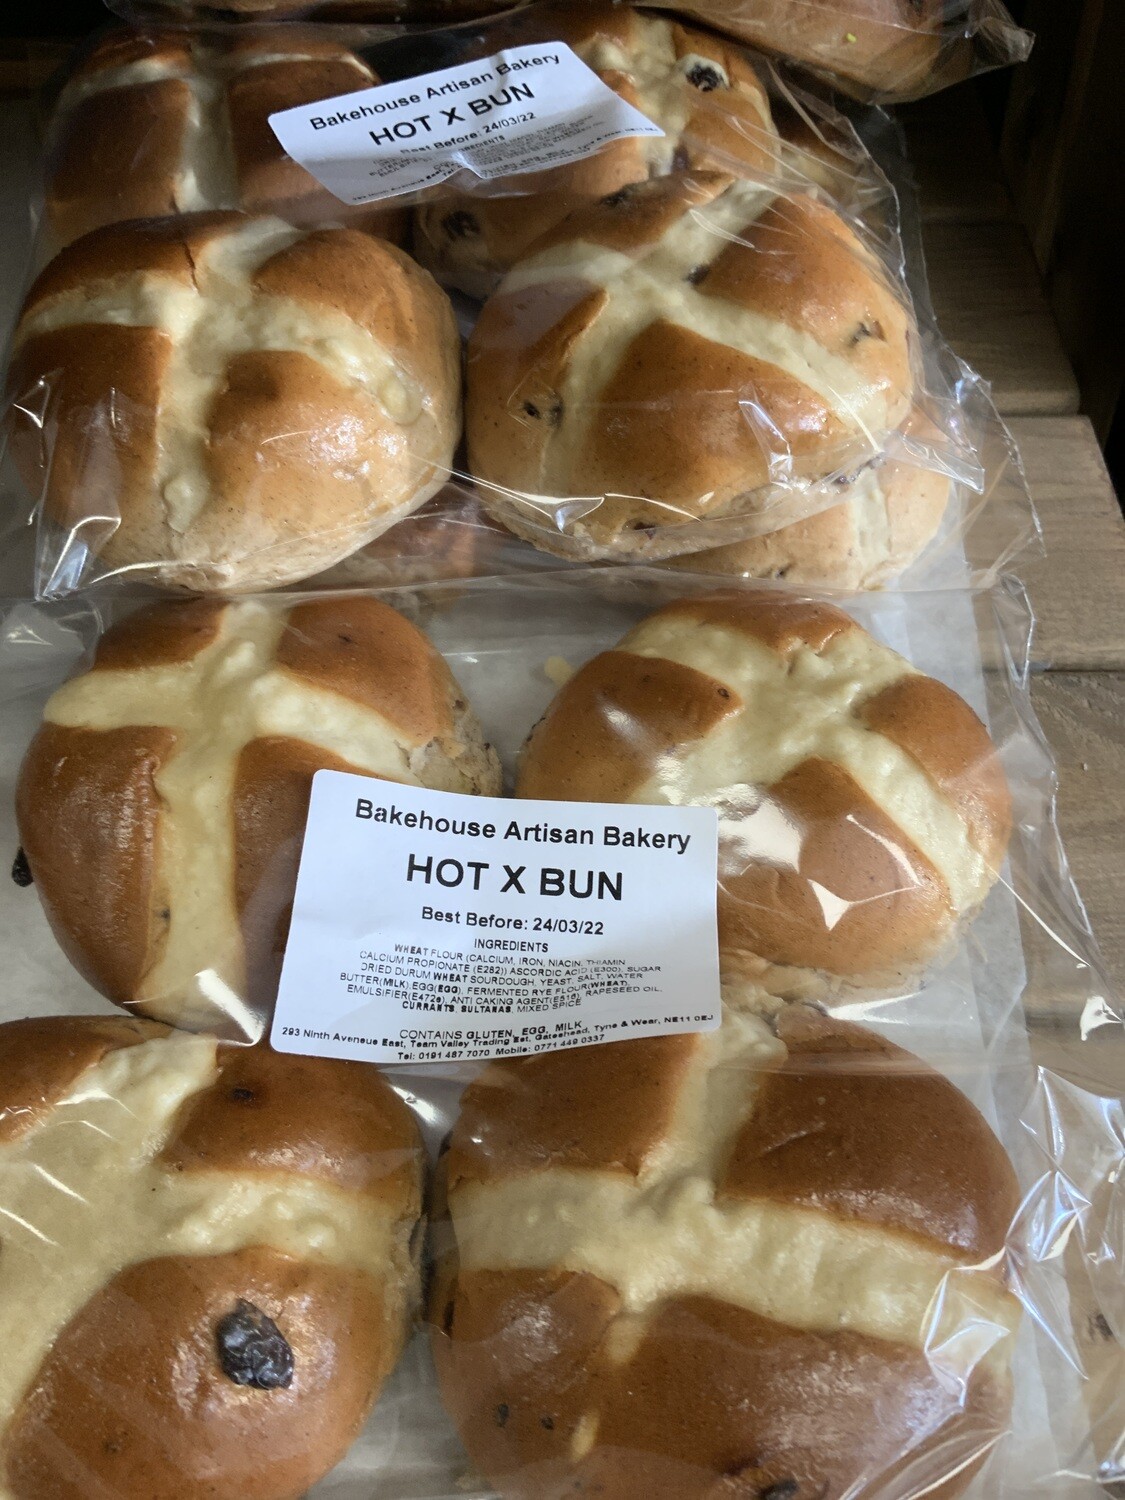 Hot Cross Buns. Pack of 4